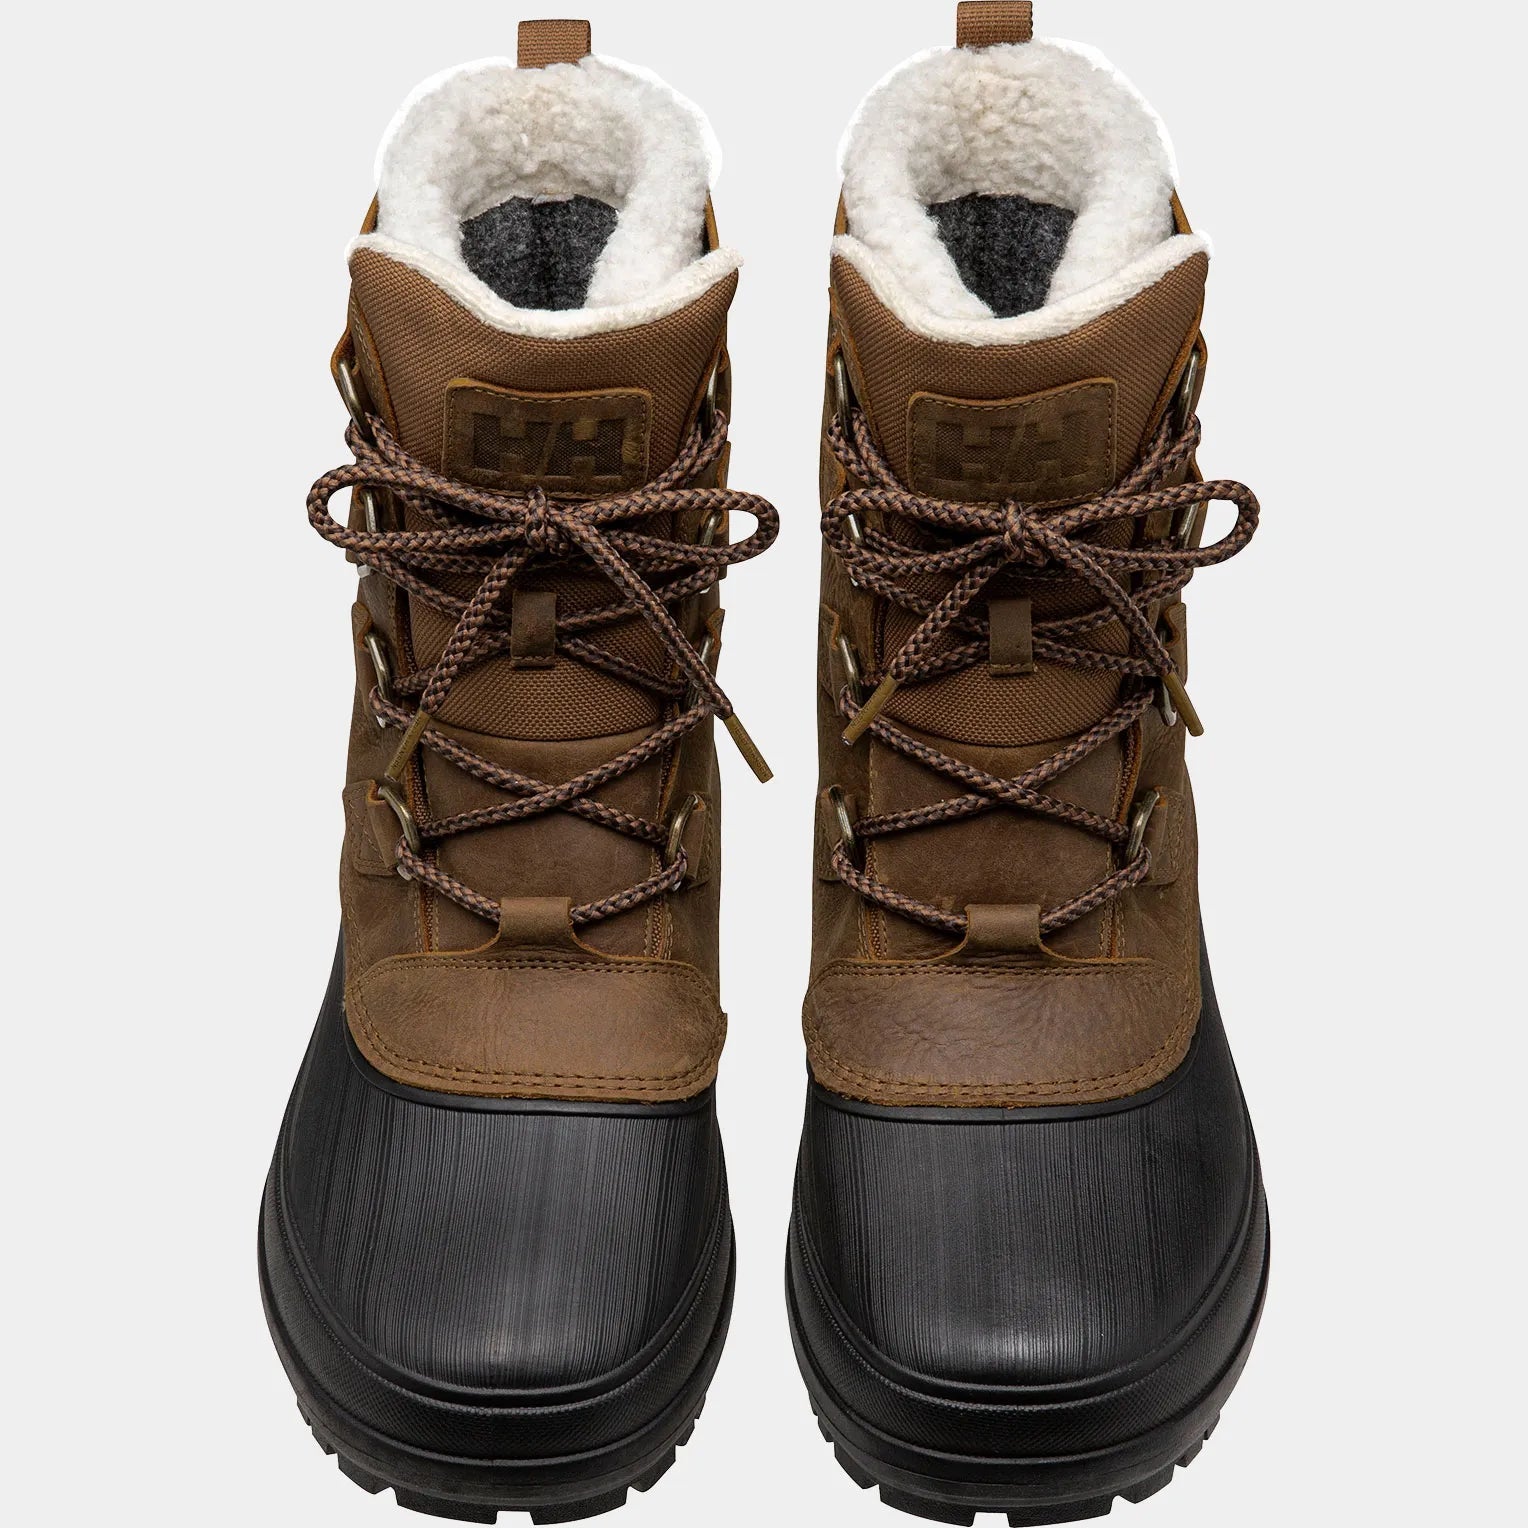 Helly Hansen Varanger Primaloft Insulated Winter Boots - FULLSEND SKI AND OUTDOOR